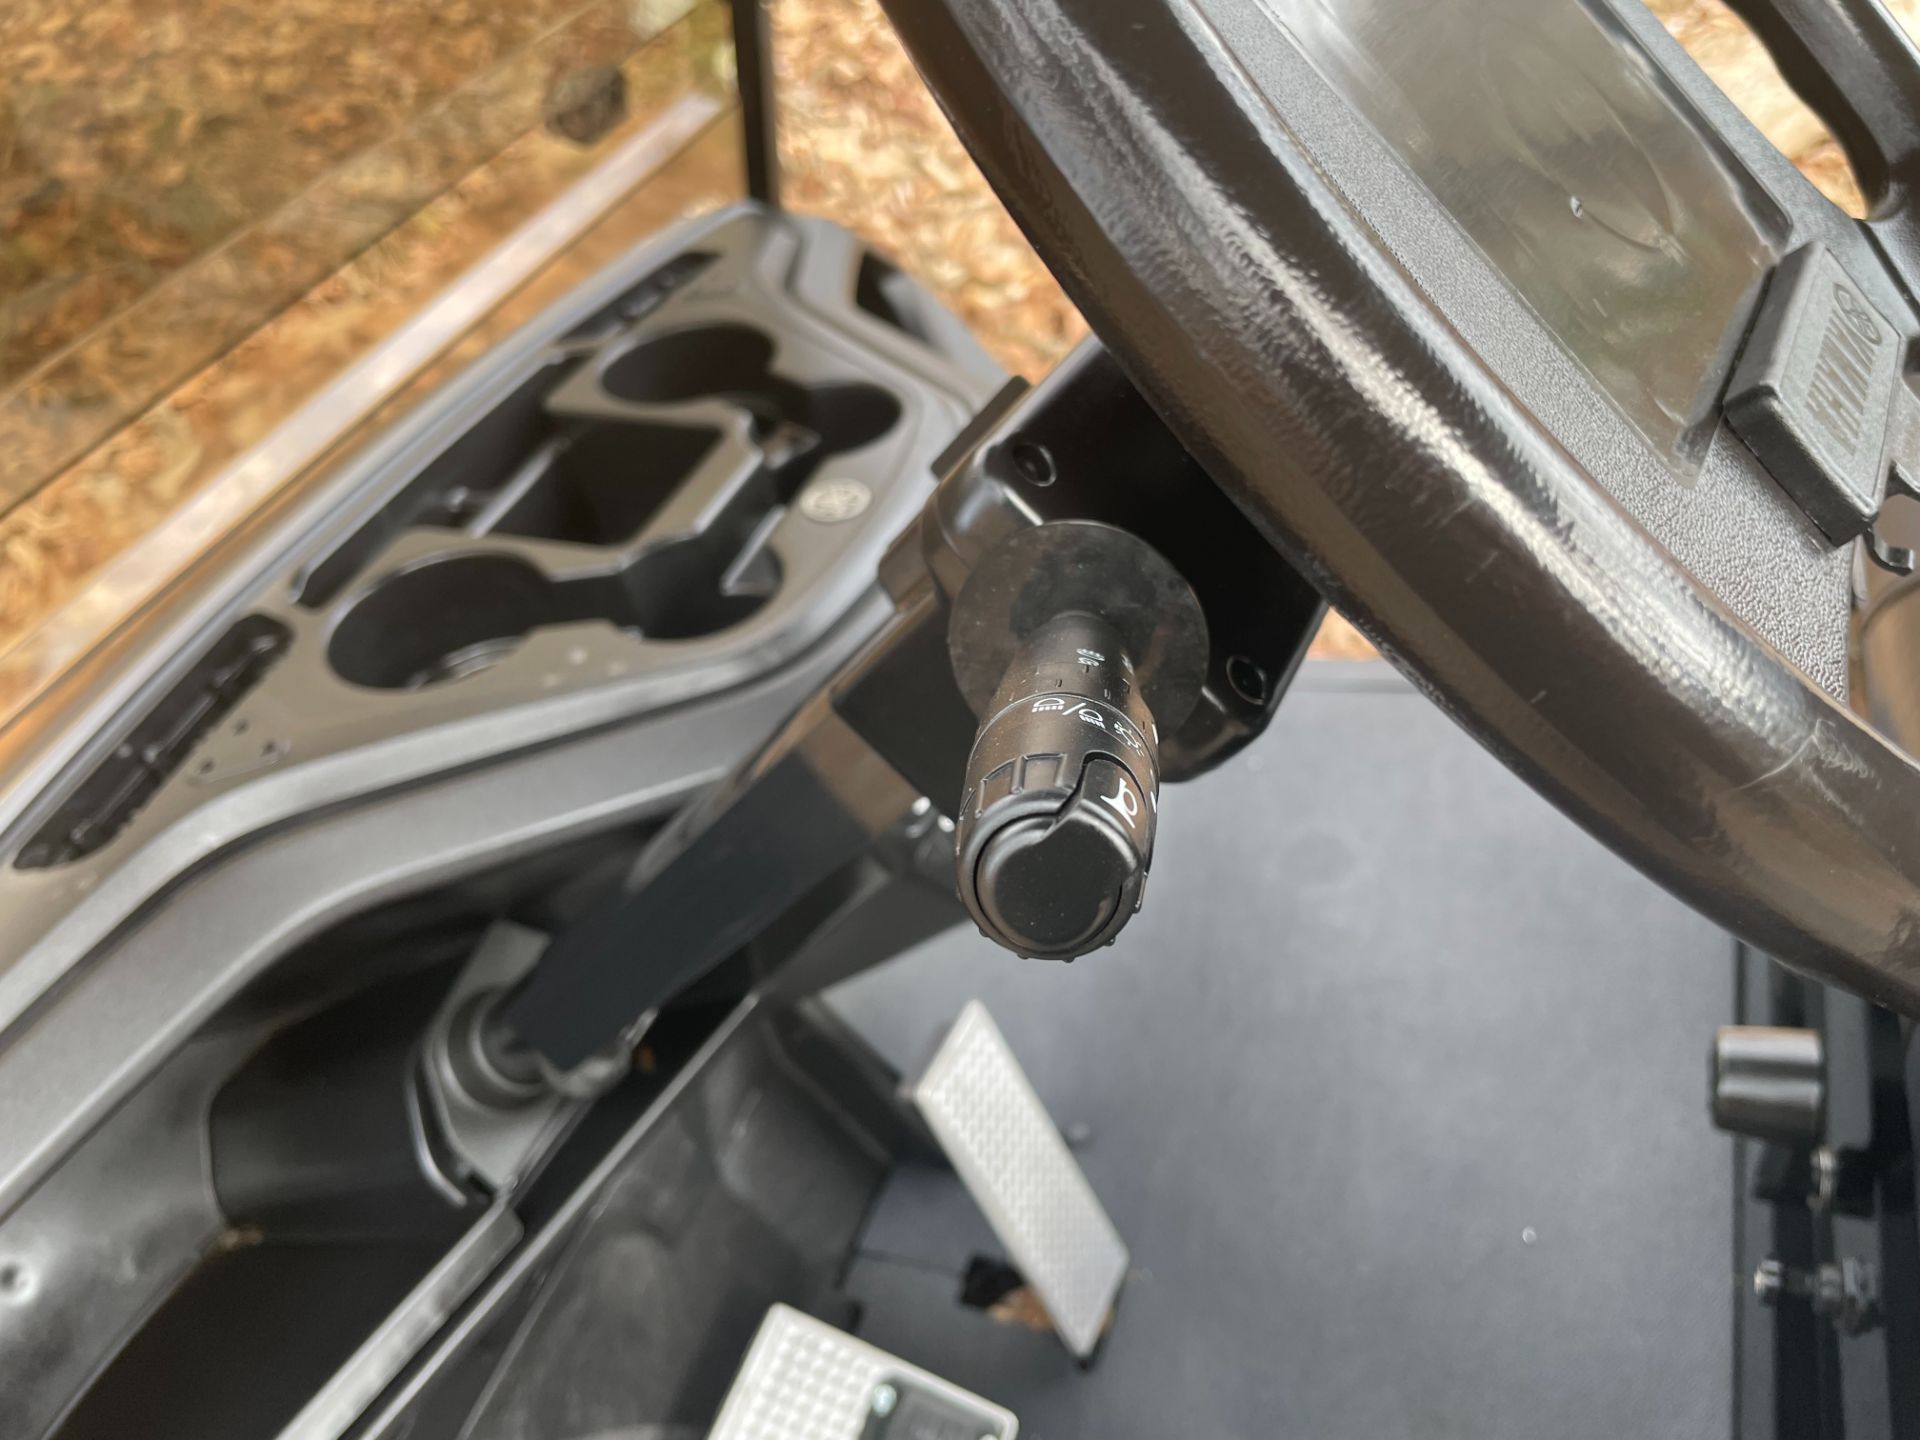 2017 YAMAHA DRIVE 2 GAS GOLF CART in Woodstock, Georgia - Photo 6